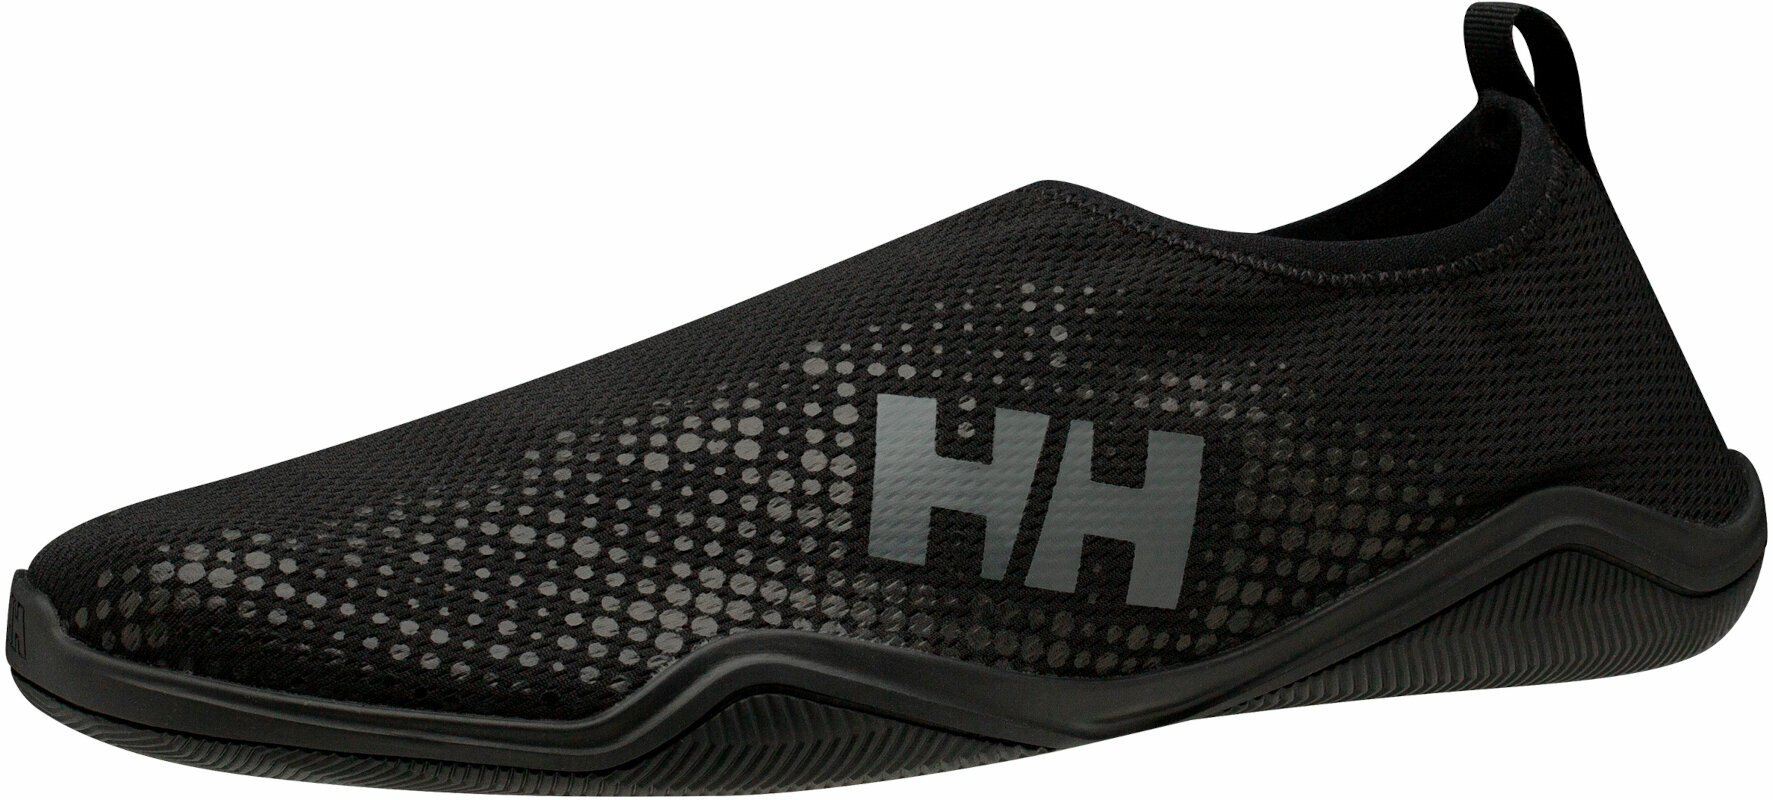 Jachtařská obuv Helly Hansen Men's Crest Watermoc Black/Charcoal 42